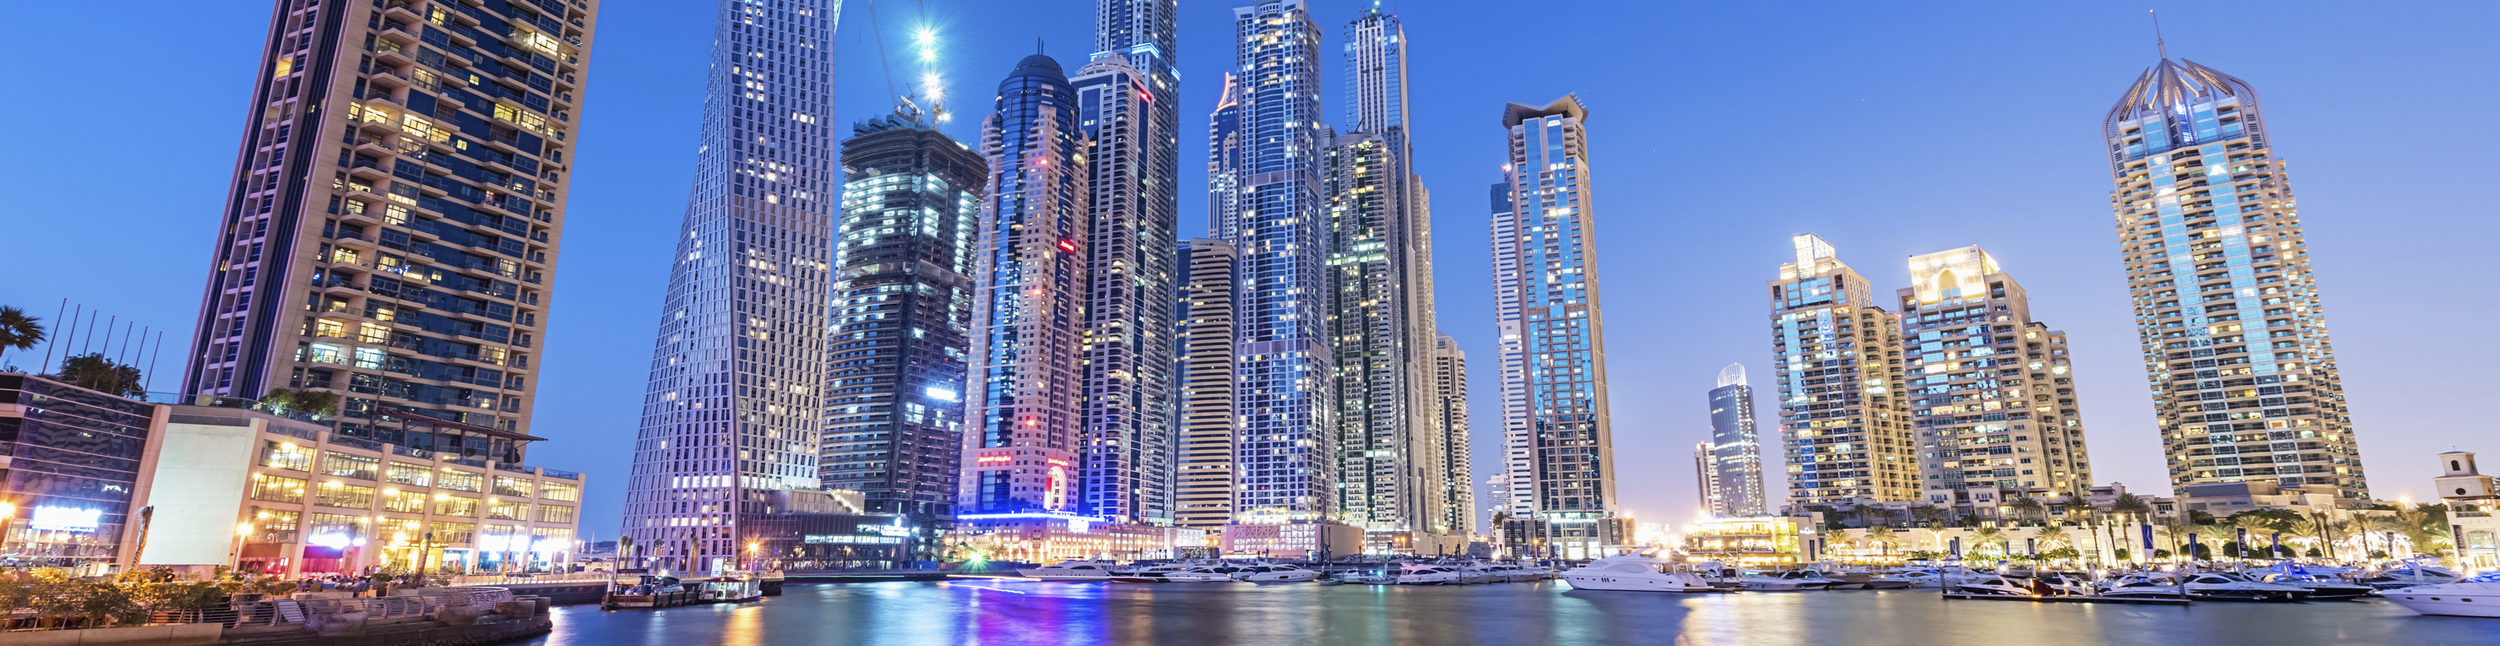 Dubai coastal city view at night